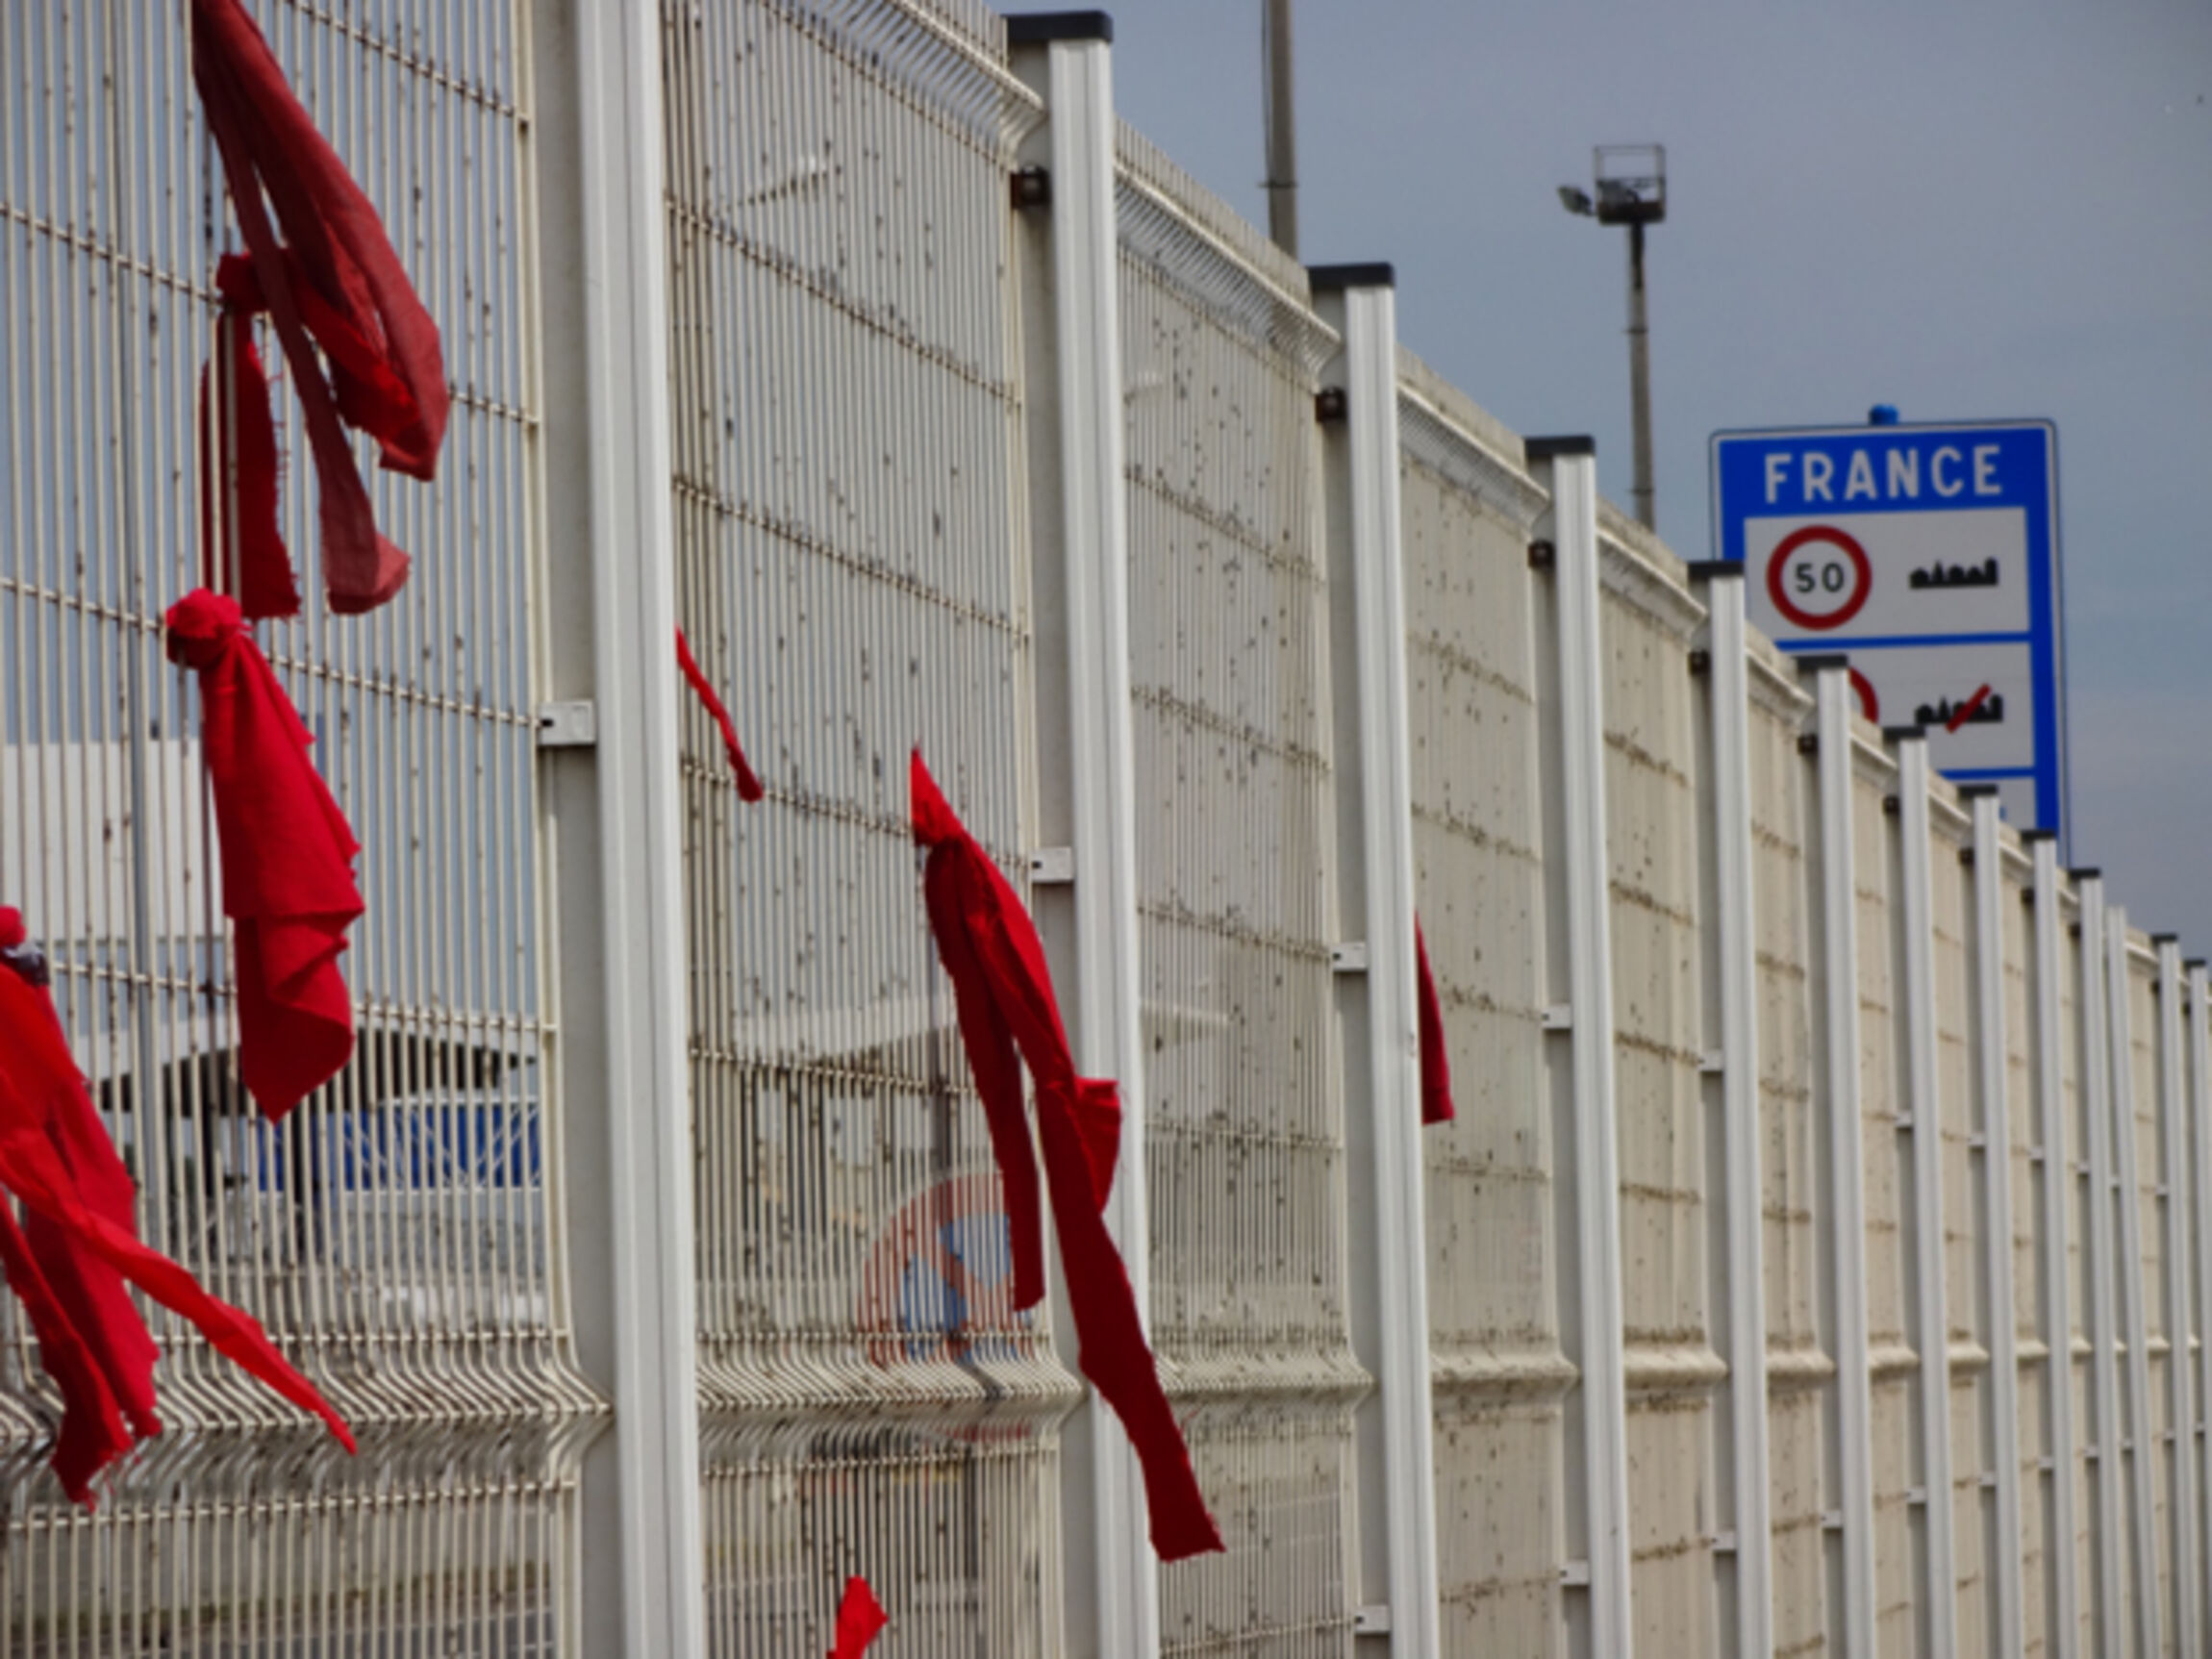 Calais_ELM_Oborski_Andenken an Verstorbene